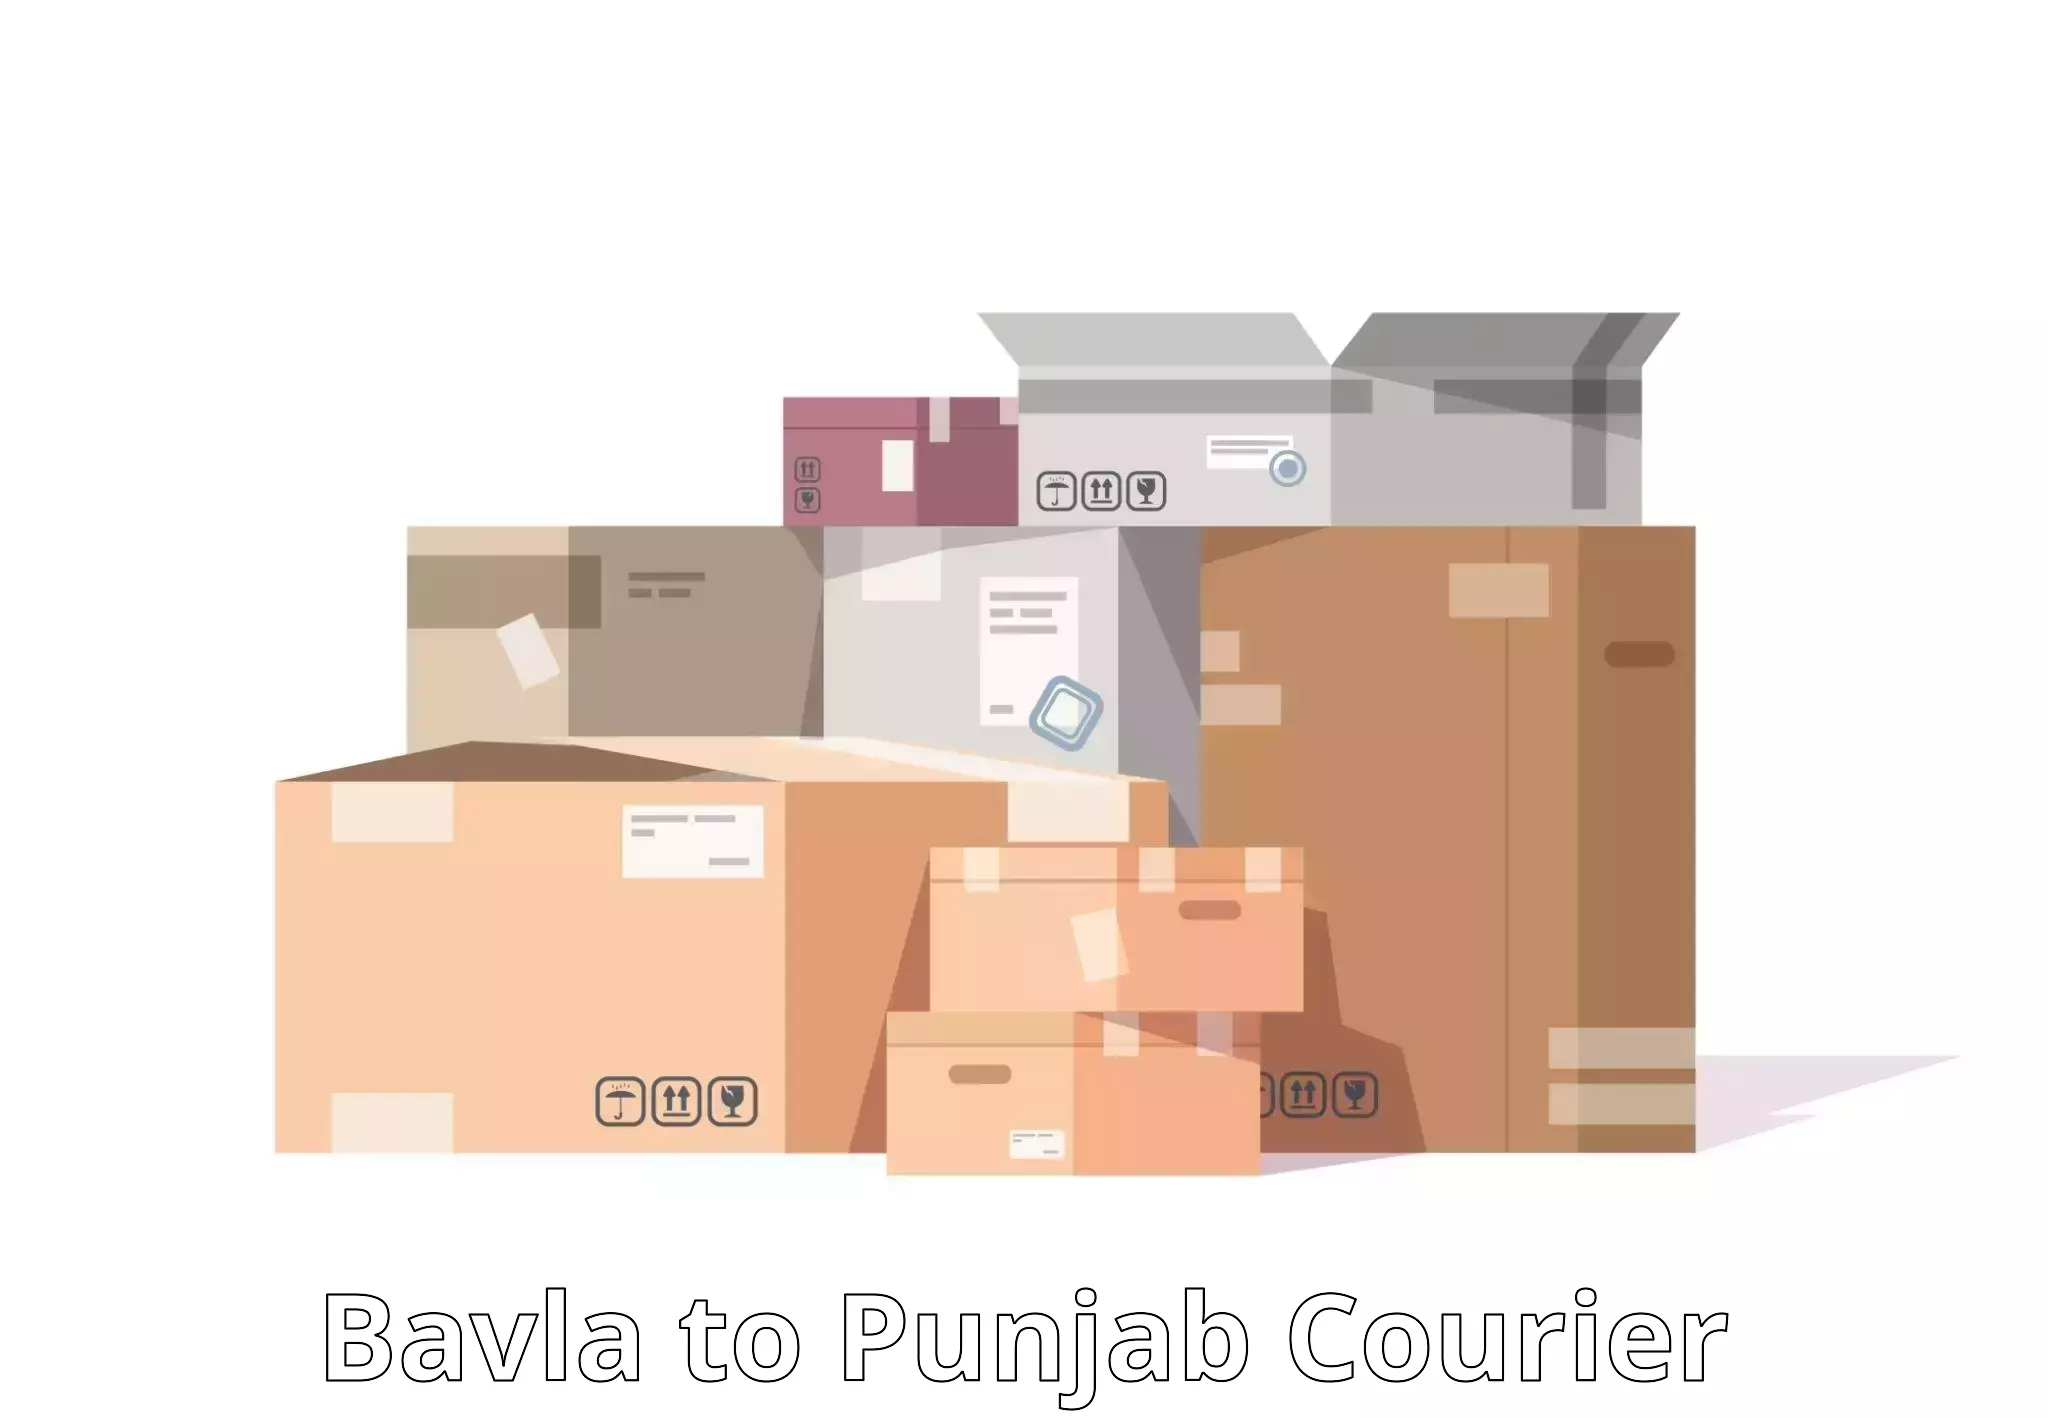 Efficient shipping operations Bavla to Patiala